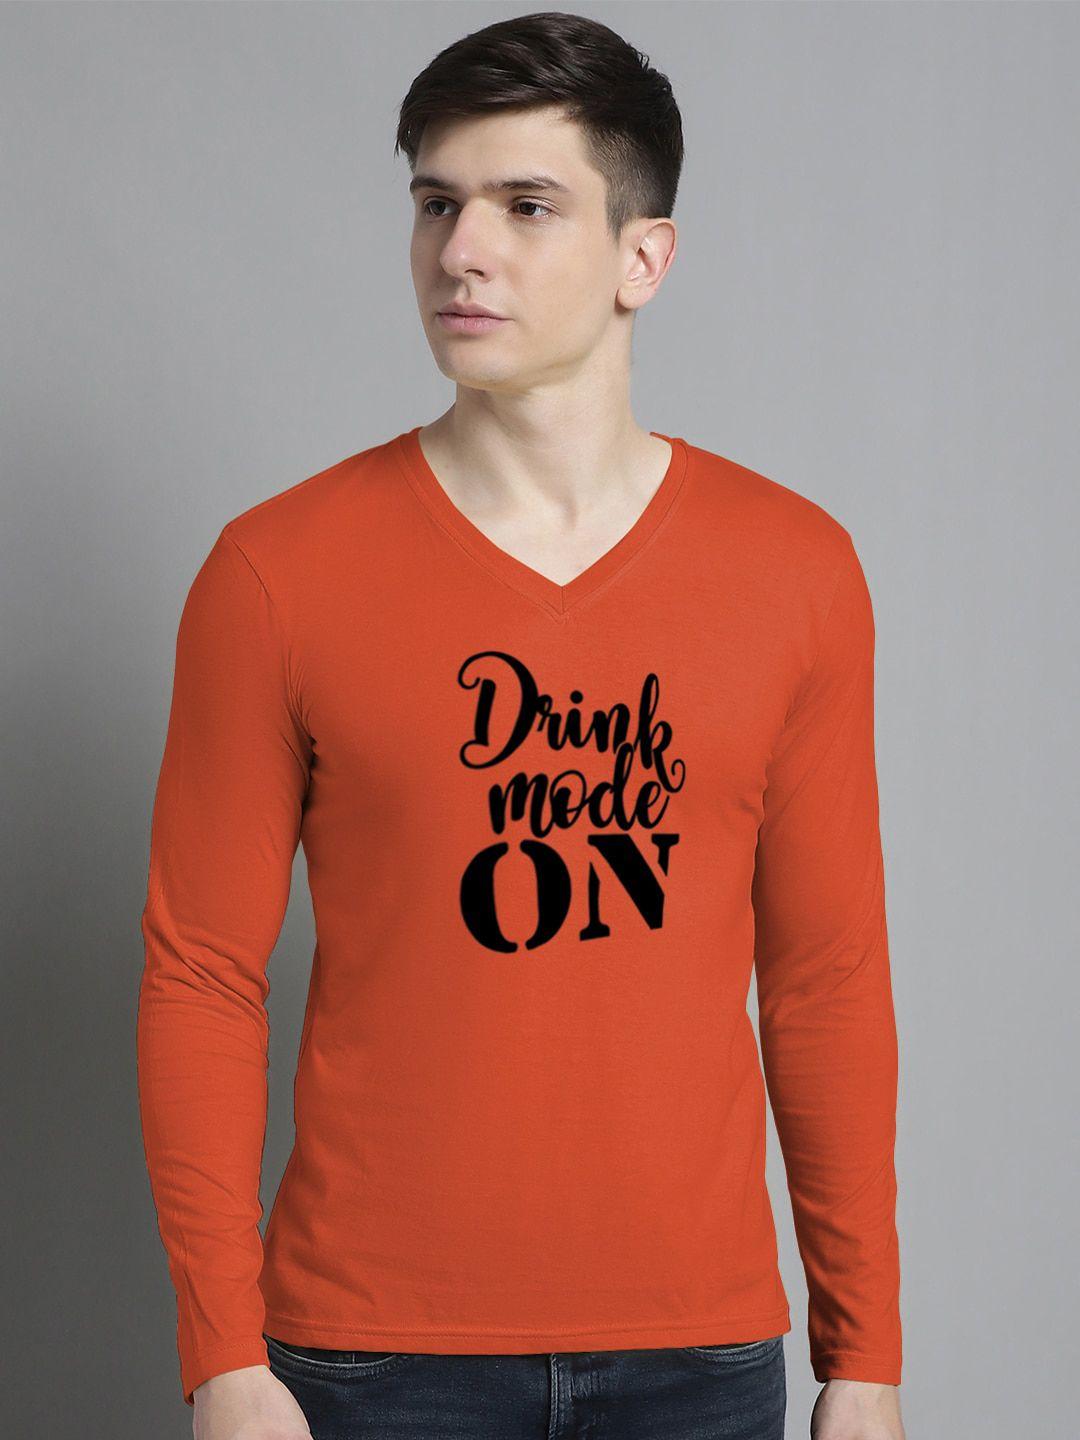 fbar typography printed v-neck slim fit cotton t-shirt